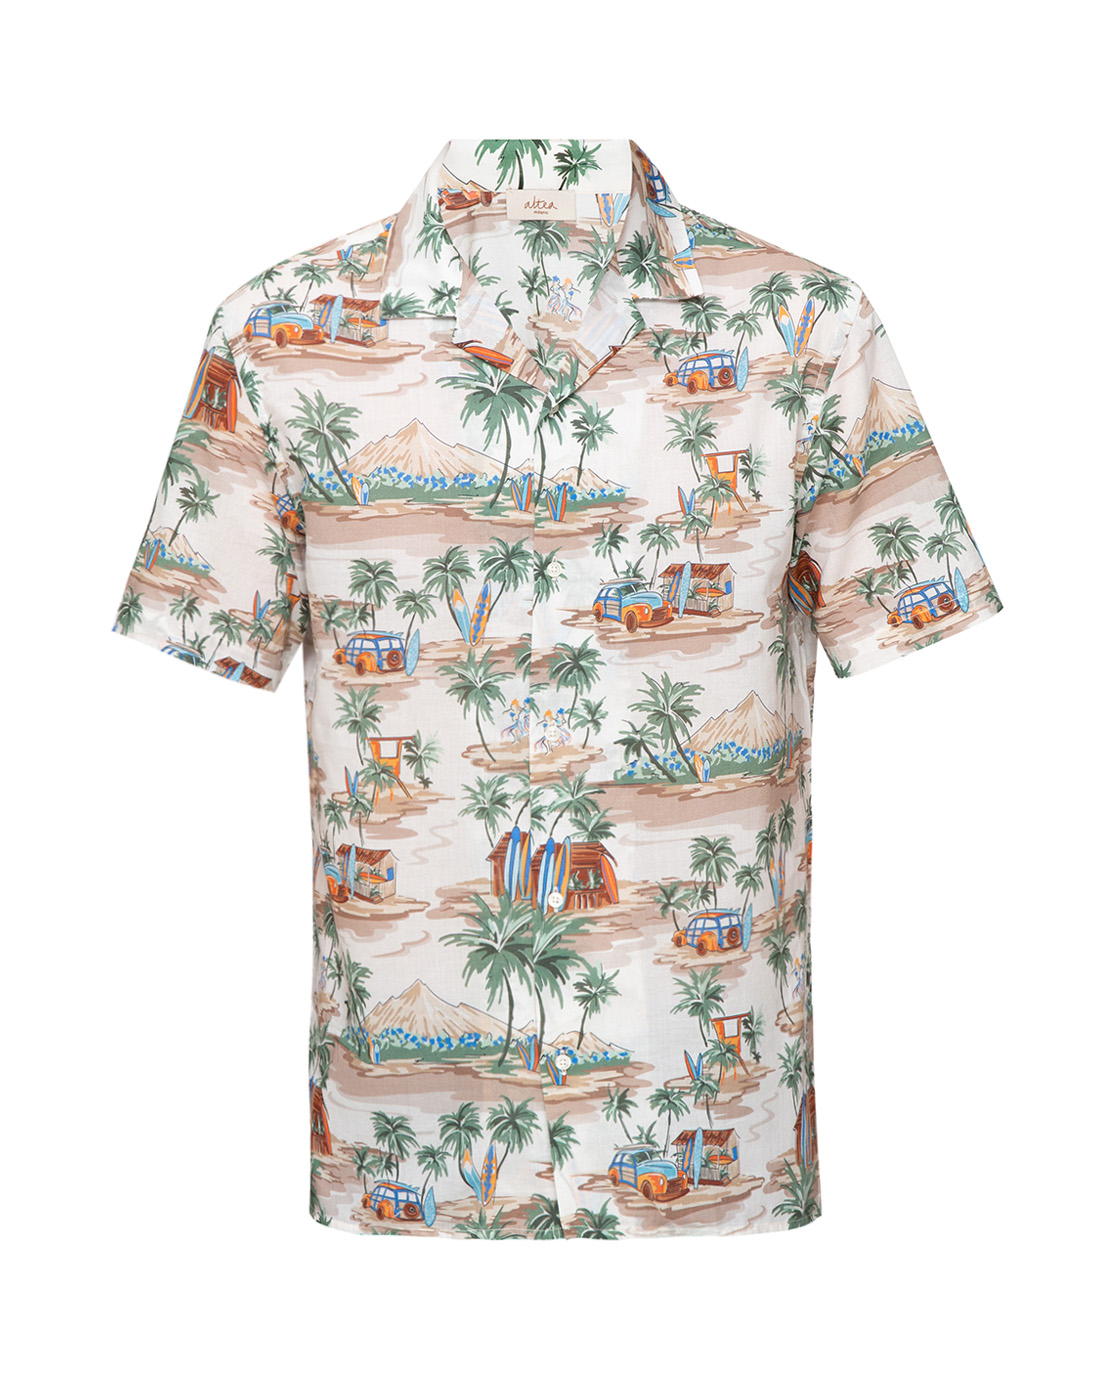 Мужская рубашка с тропическим узор ALTEA S2054021-31-1